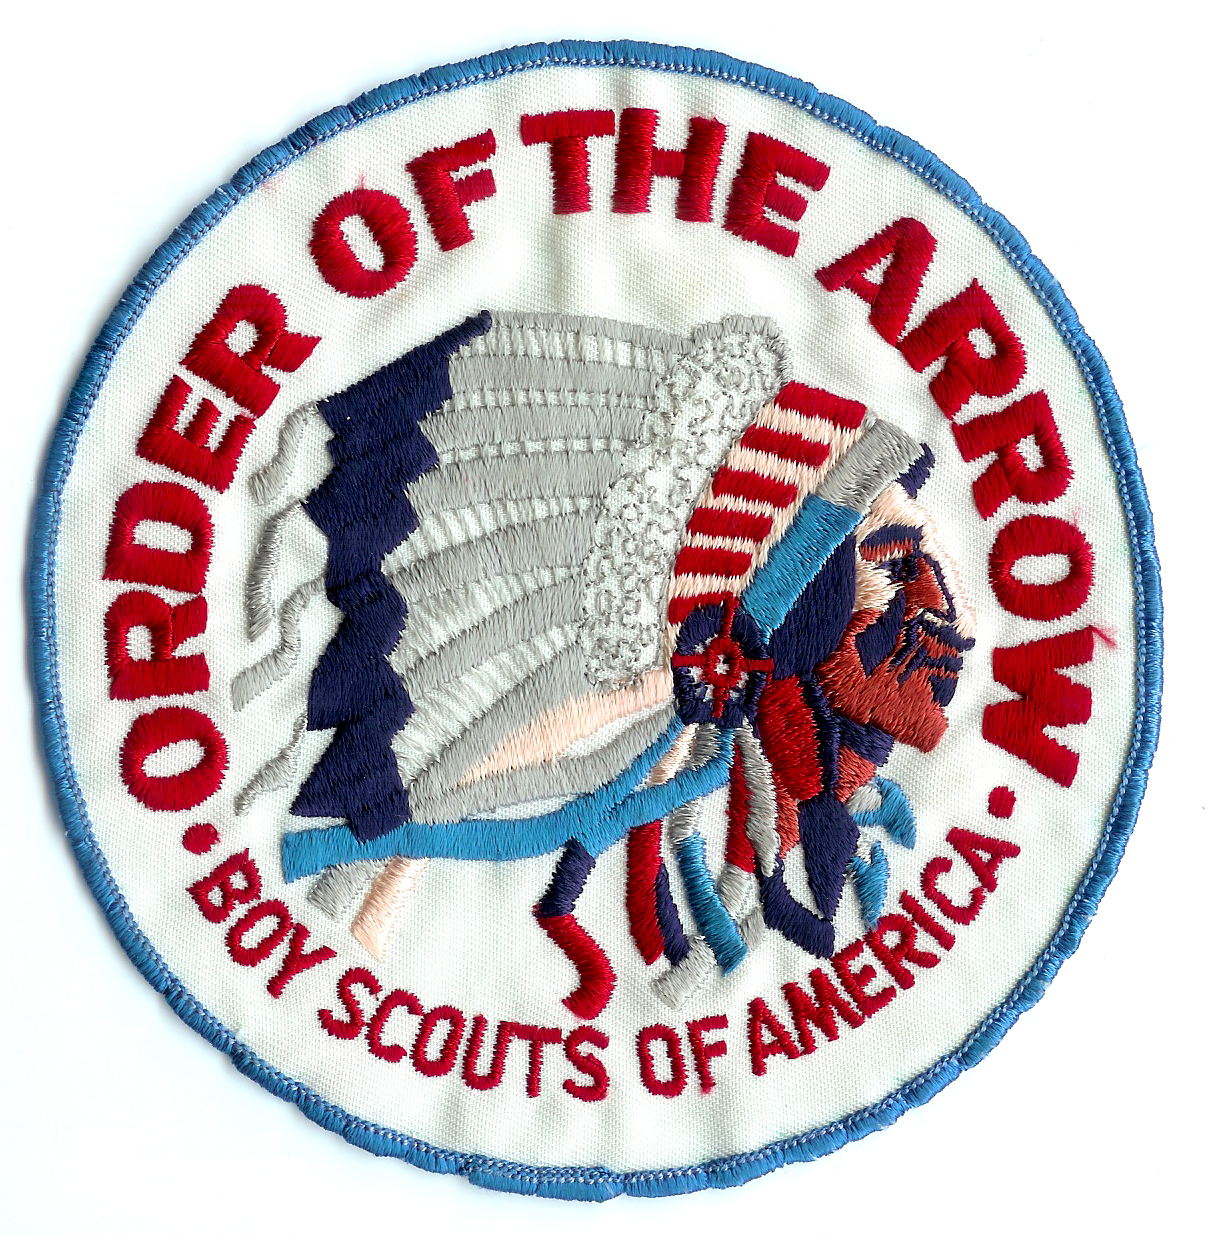 OA USA BOY SCOUTS OF AMERICA BSA ORDER OF ARROW NORTHEAST REGION SCOUT PATCH